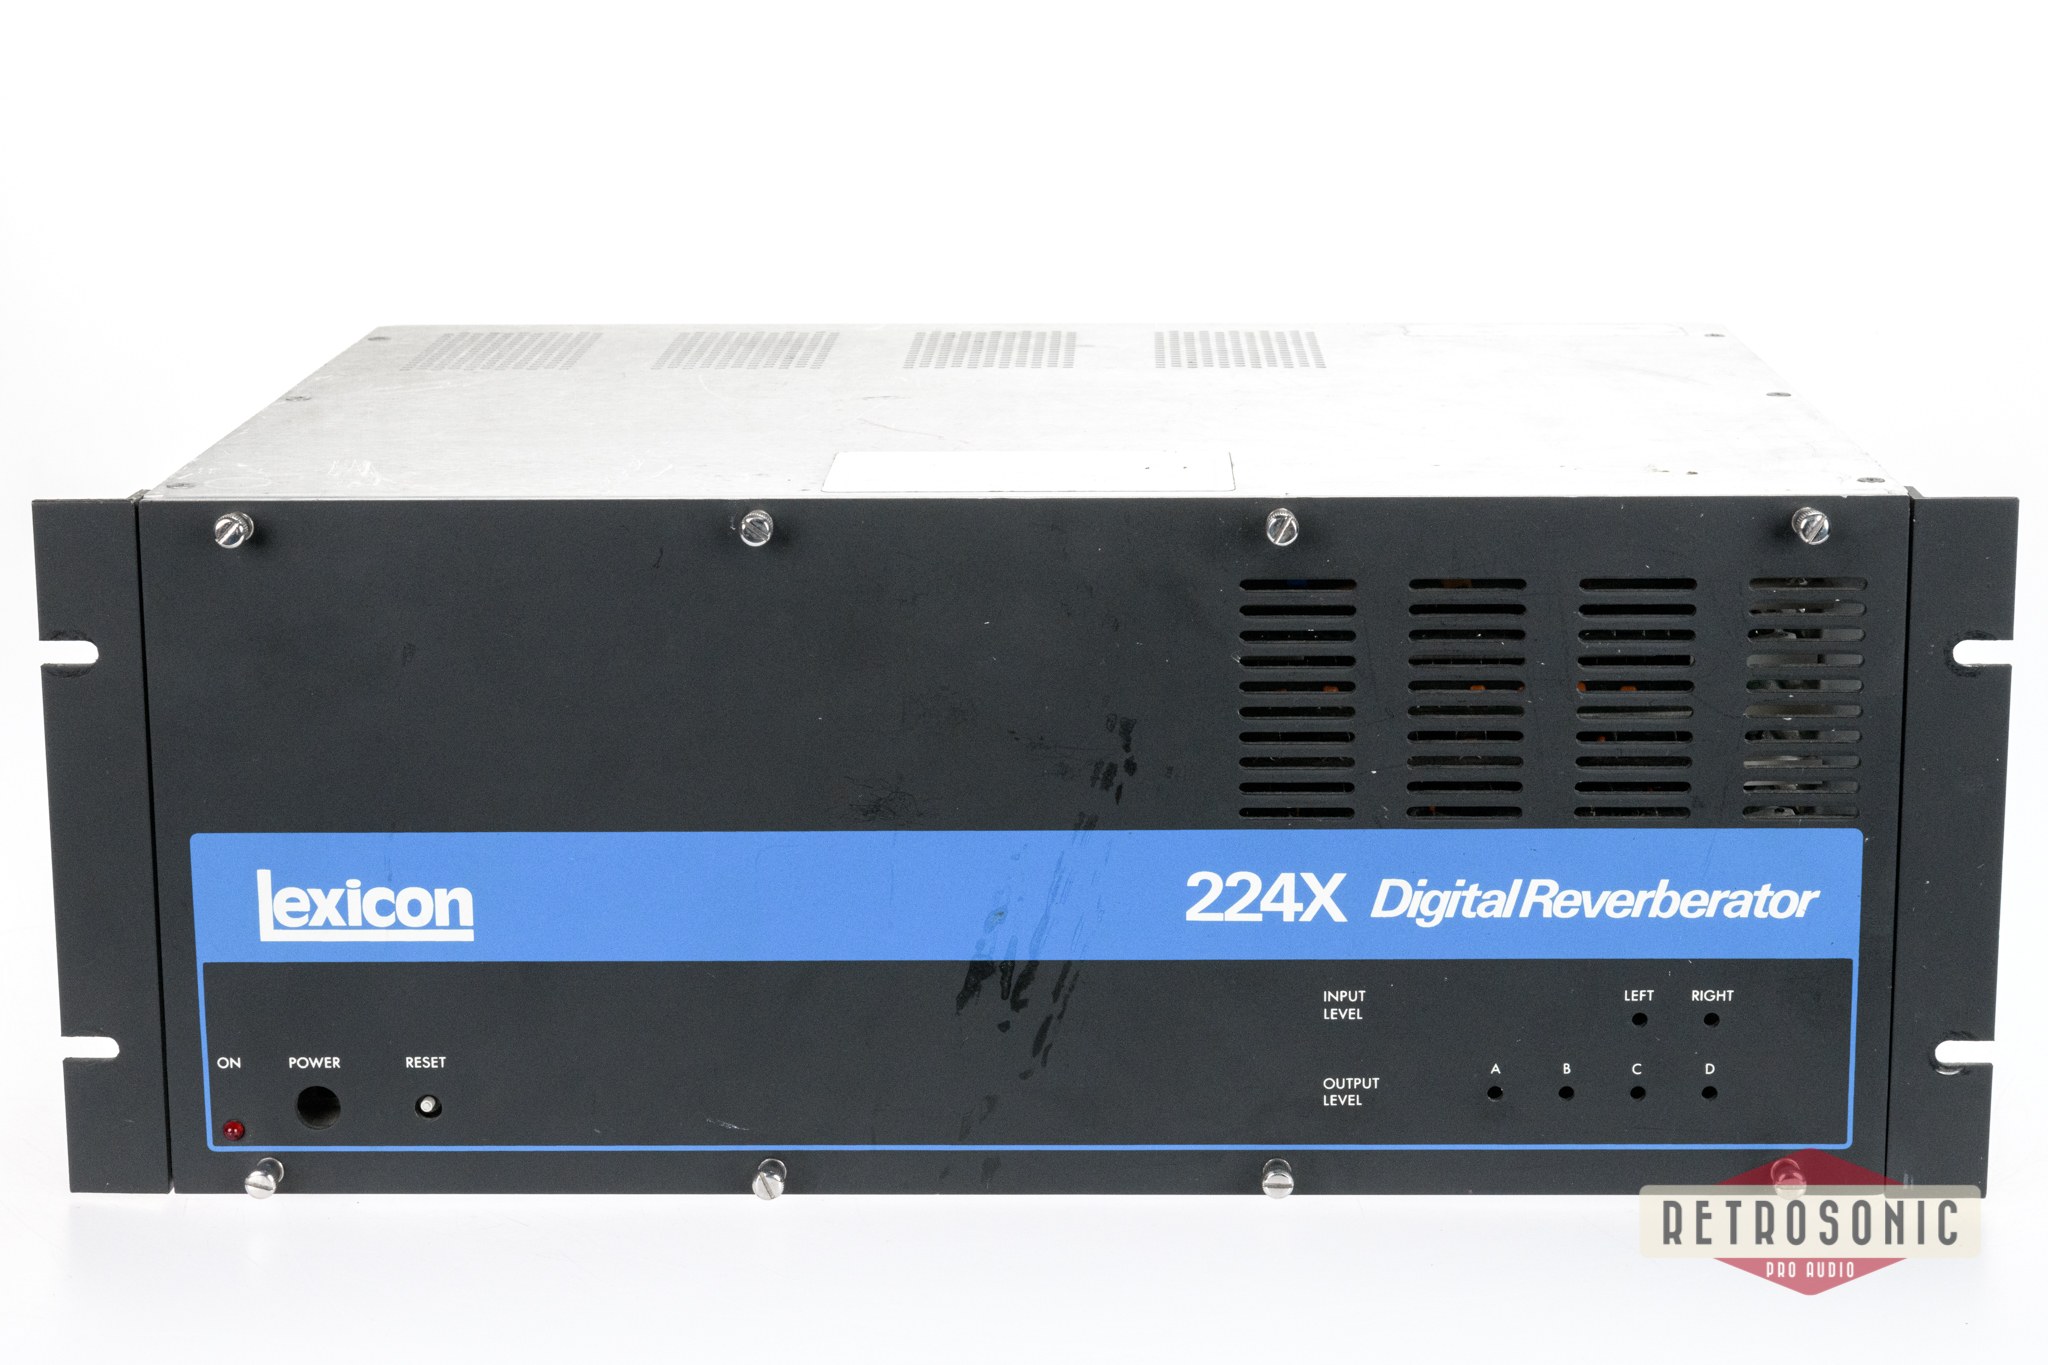 Lexicon 224XL Digital Reverberator with LARC